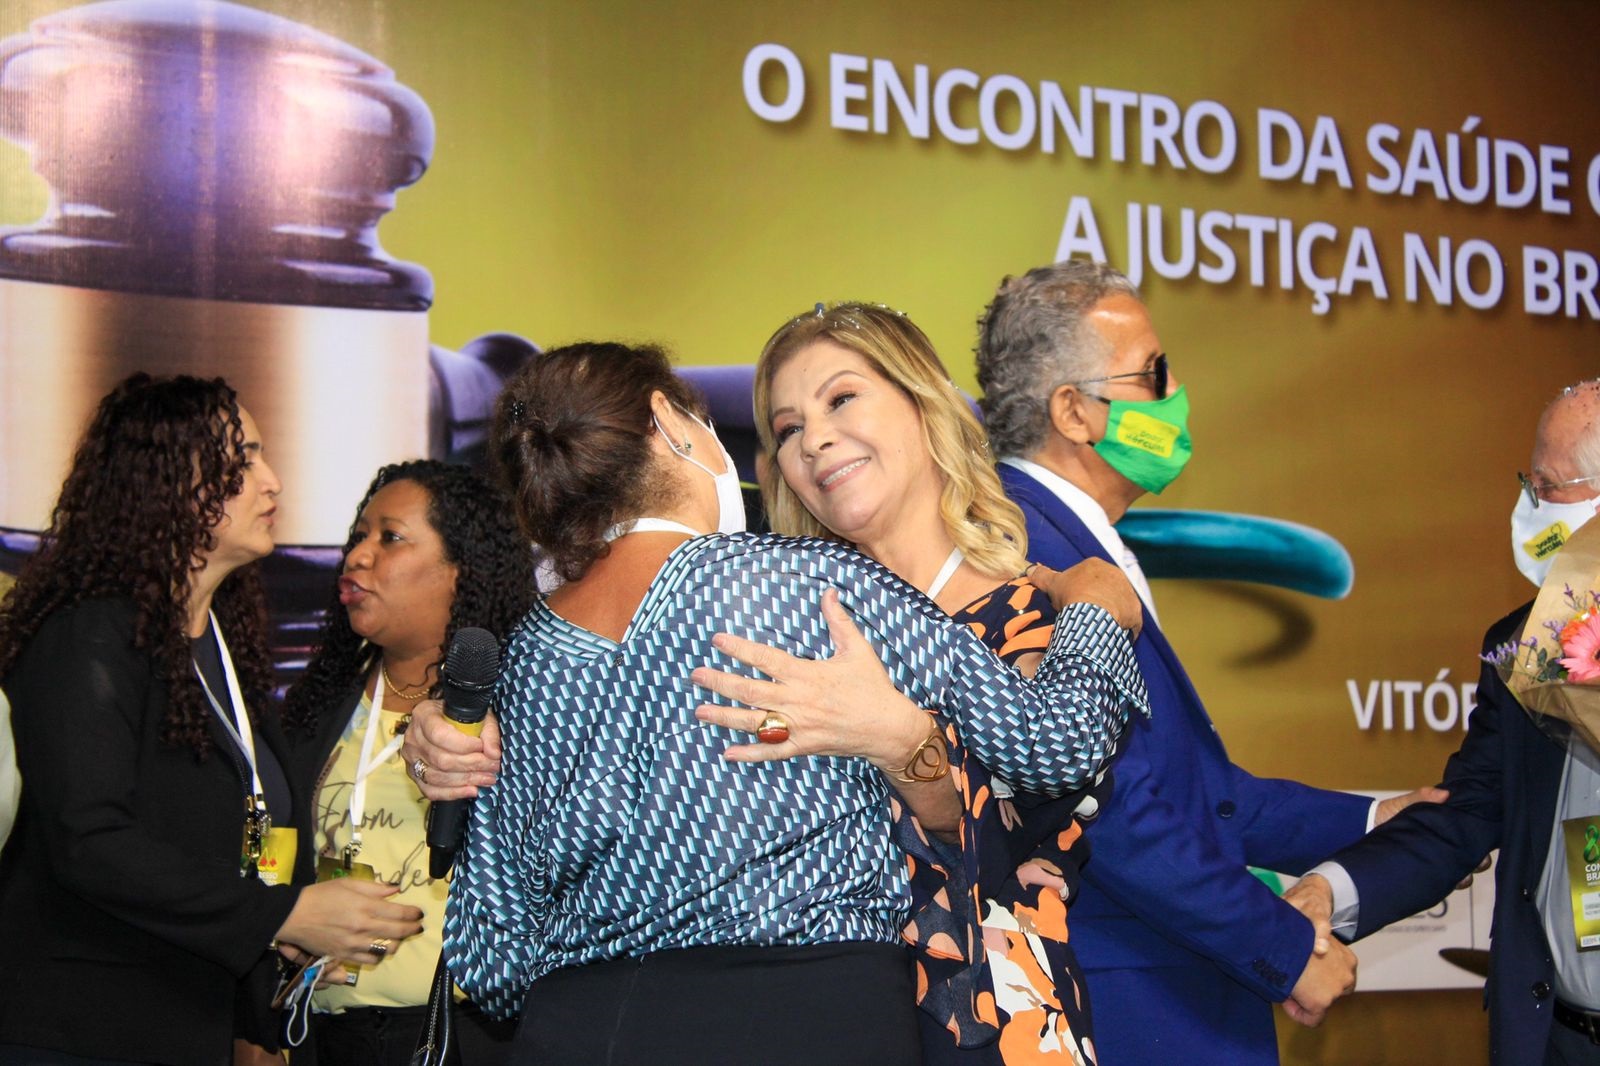 8 congresso brasileiro medico juridico da saude 20